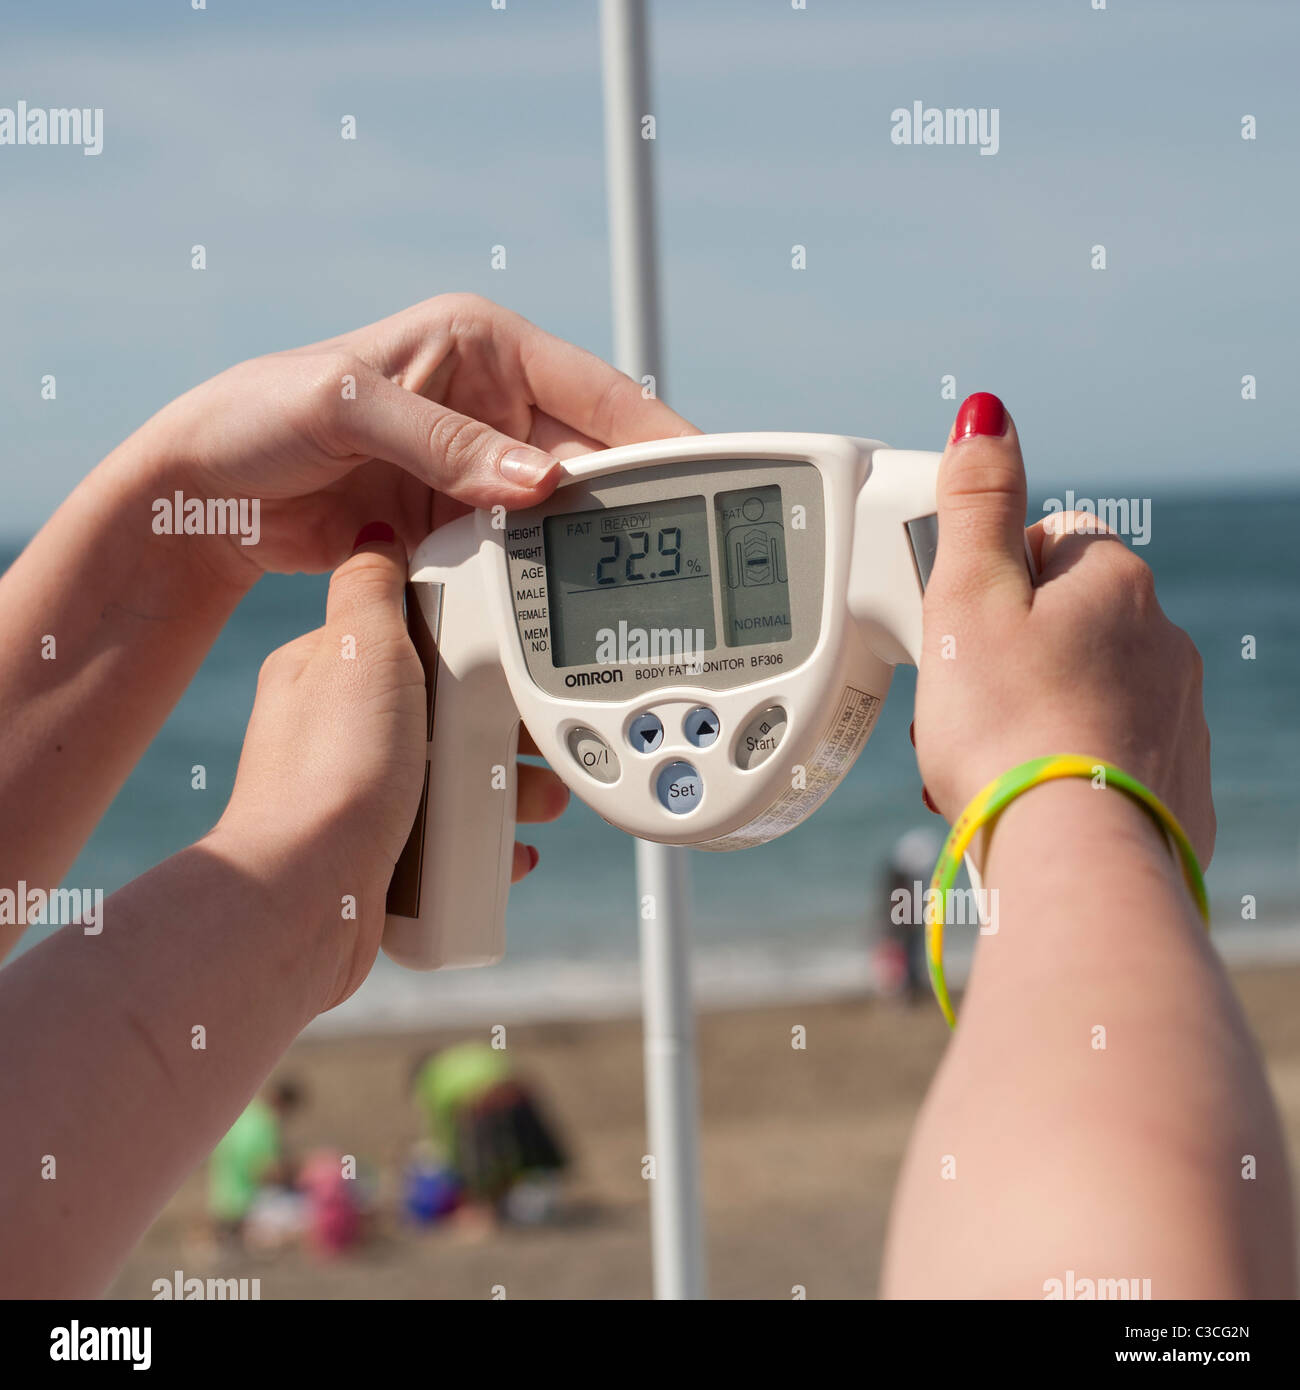 https://c8.alamy.com/comp/C3CG2N/a-person-having-a-free-checkup-using-an-omron-hand-held-body-fat-monitor-C3CG2N.jpg